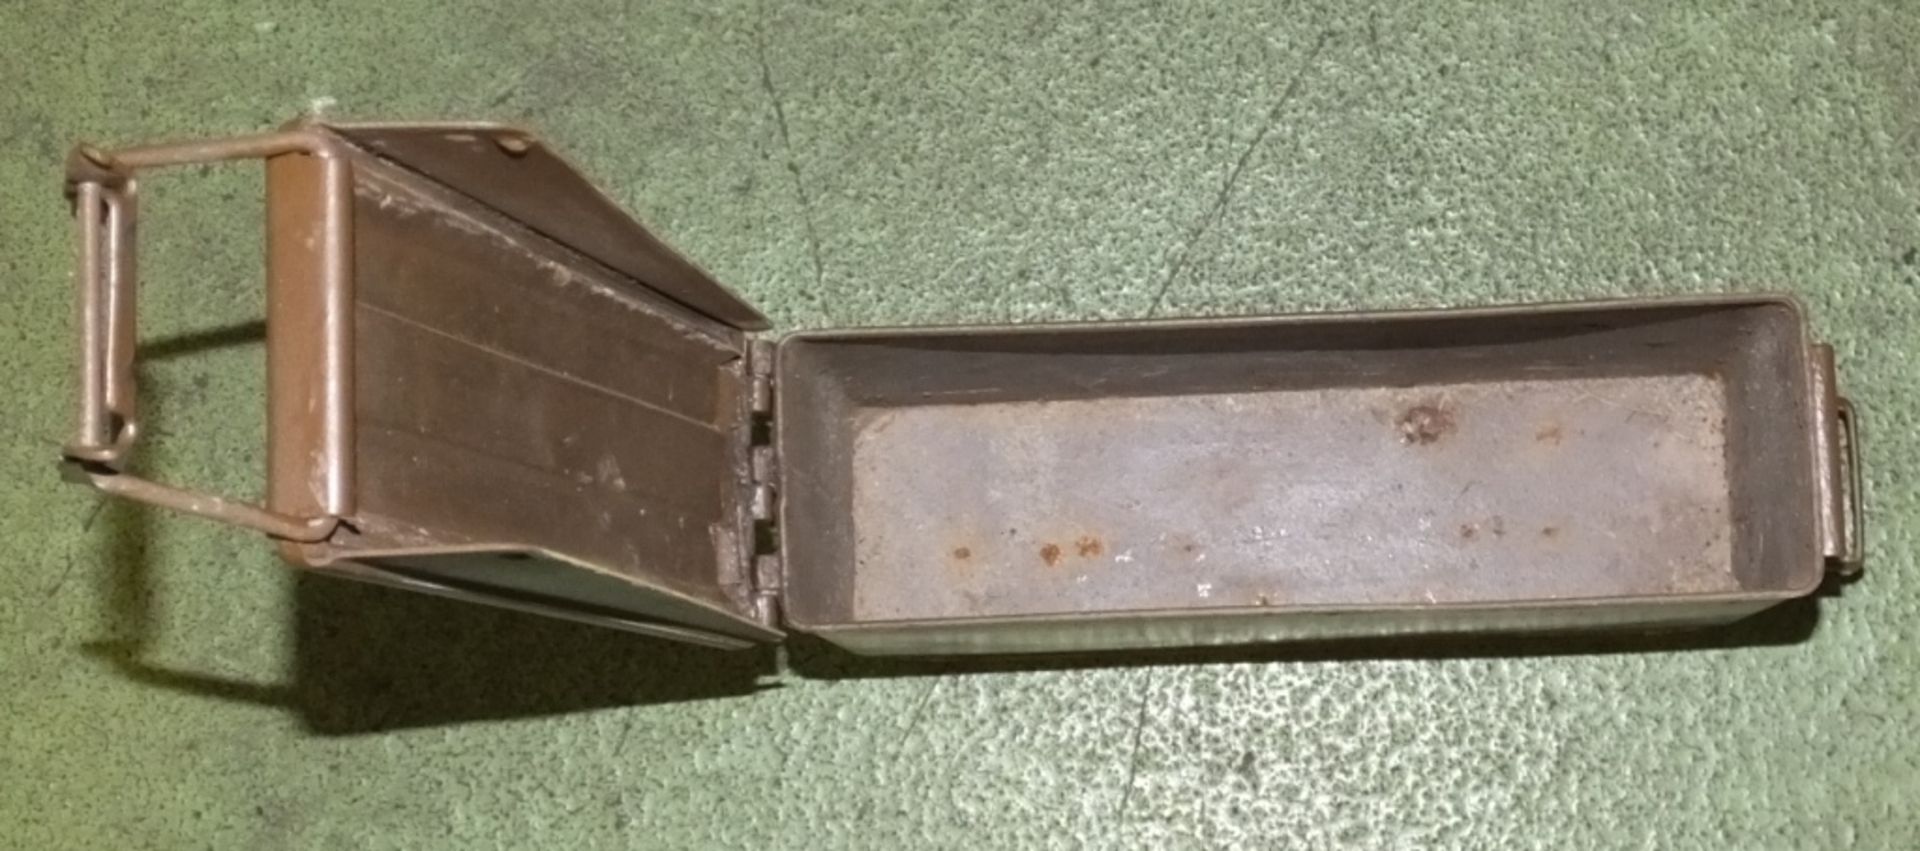 4x Ammunition Boxes Refurbished H84 - Image 2 of 2